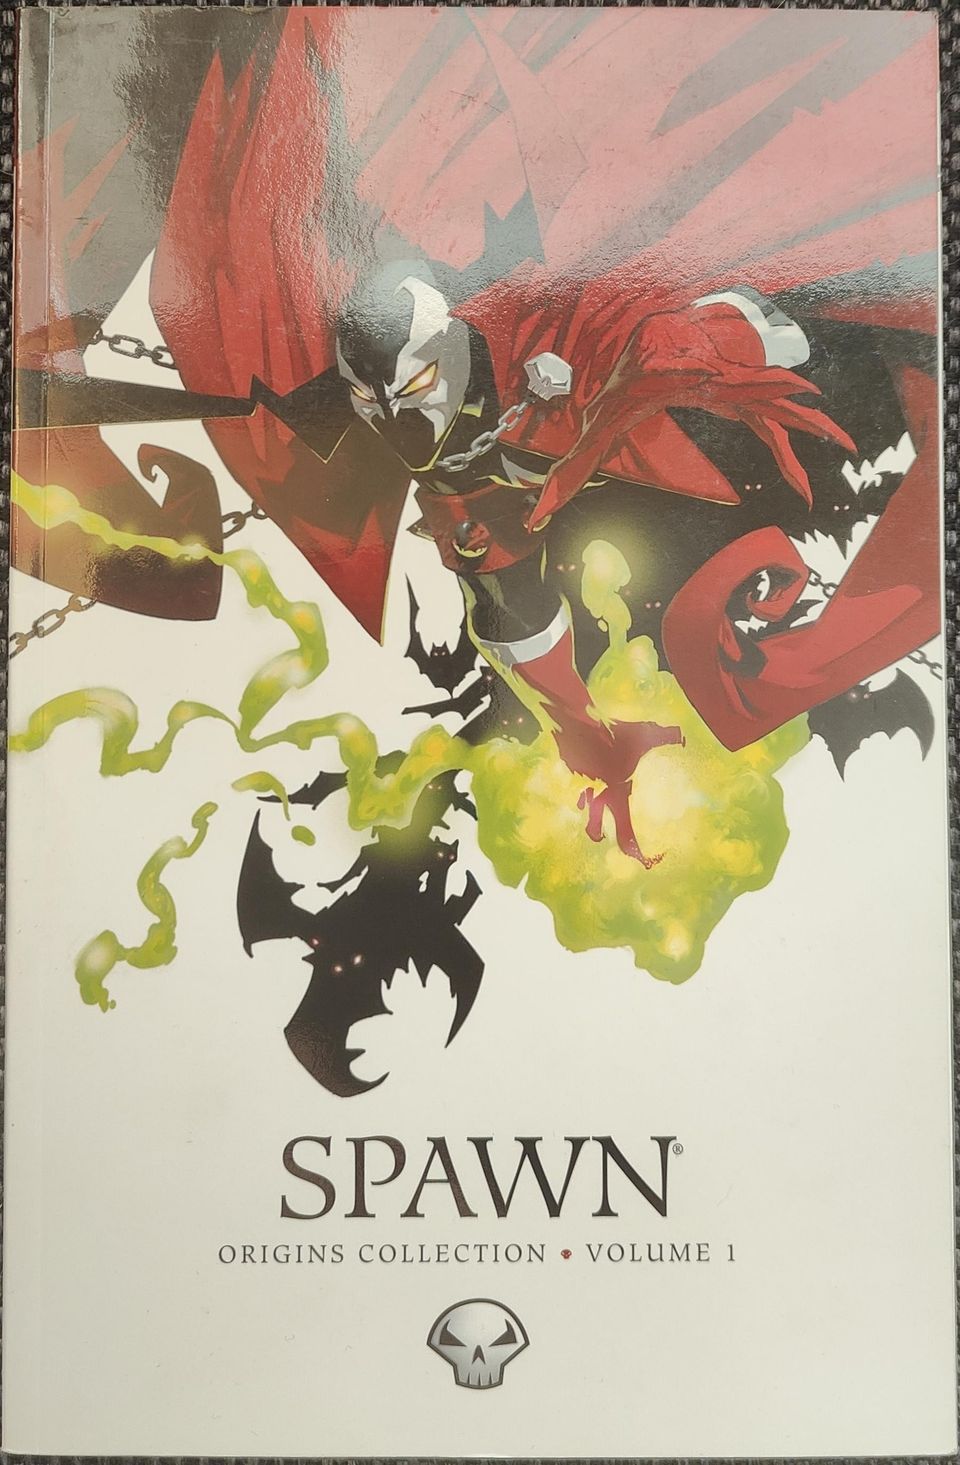 Spawn Volume 1 (Image Comics)